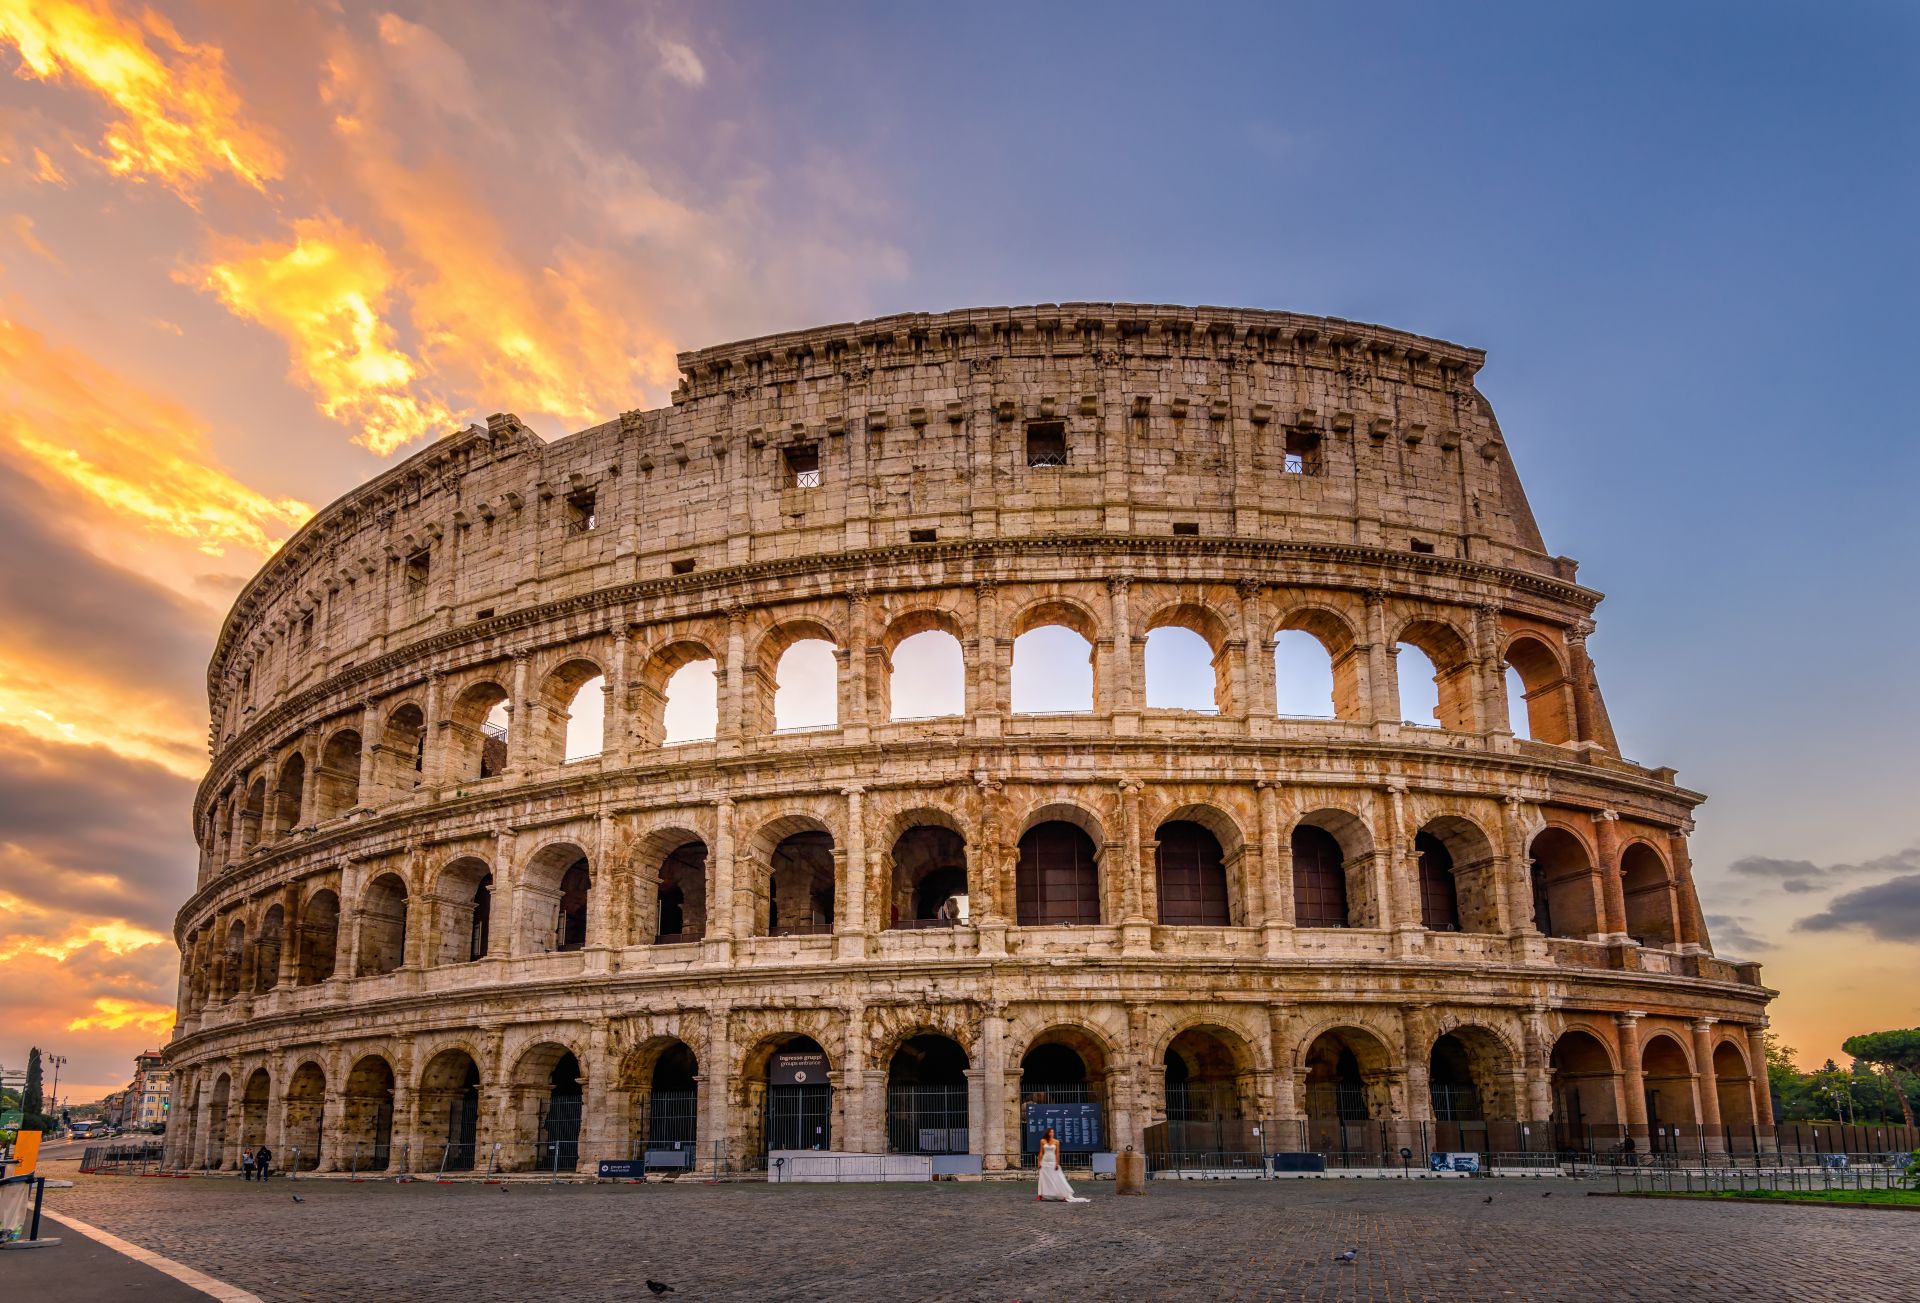 Vista del Coliseo de Roma y sol matinal, Italia, Europa.